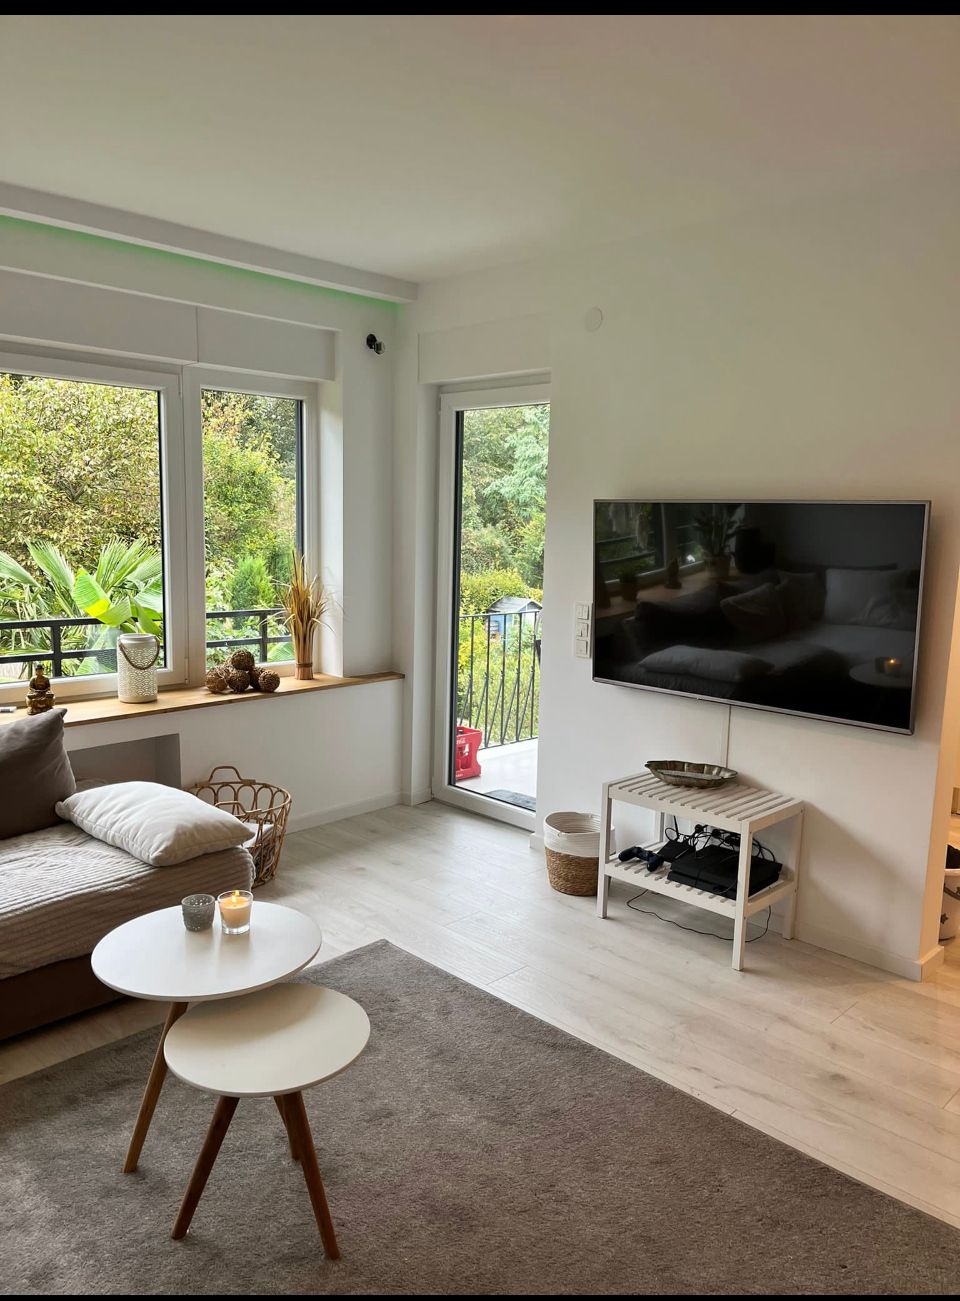 Modern, cozy apartment, near the Rhine Energy Stadium